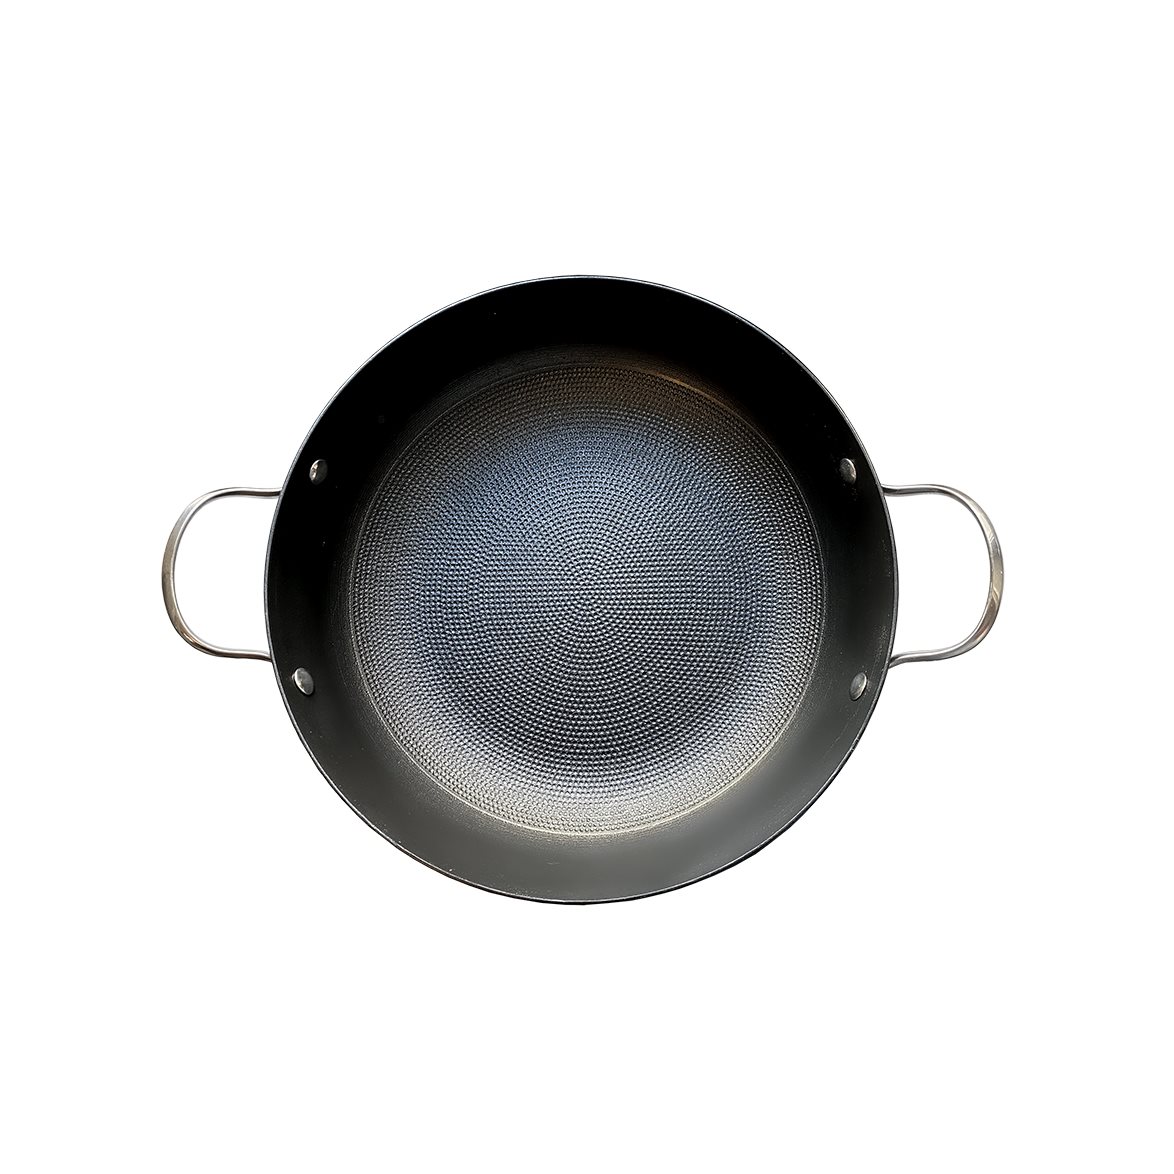 Nonstick Cookware, Shop Online for Safe Nonstick Cookware. The Best  Nonstick Cookware Brand Made in Denmark